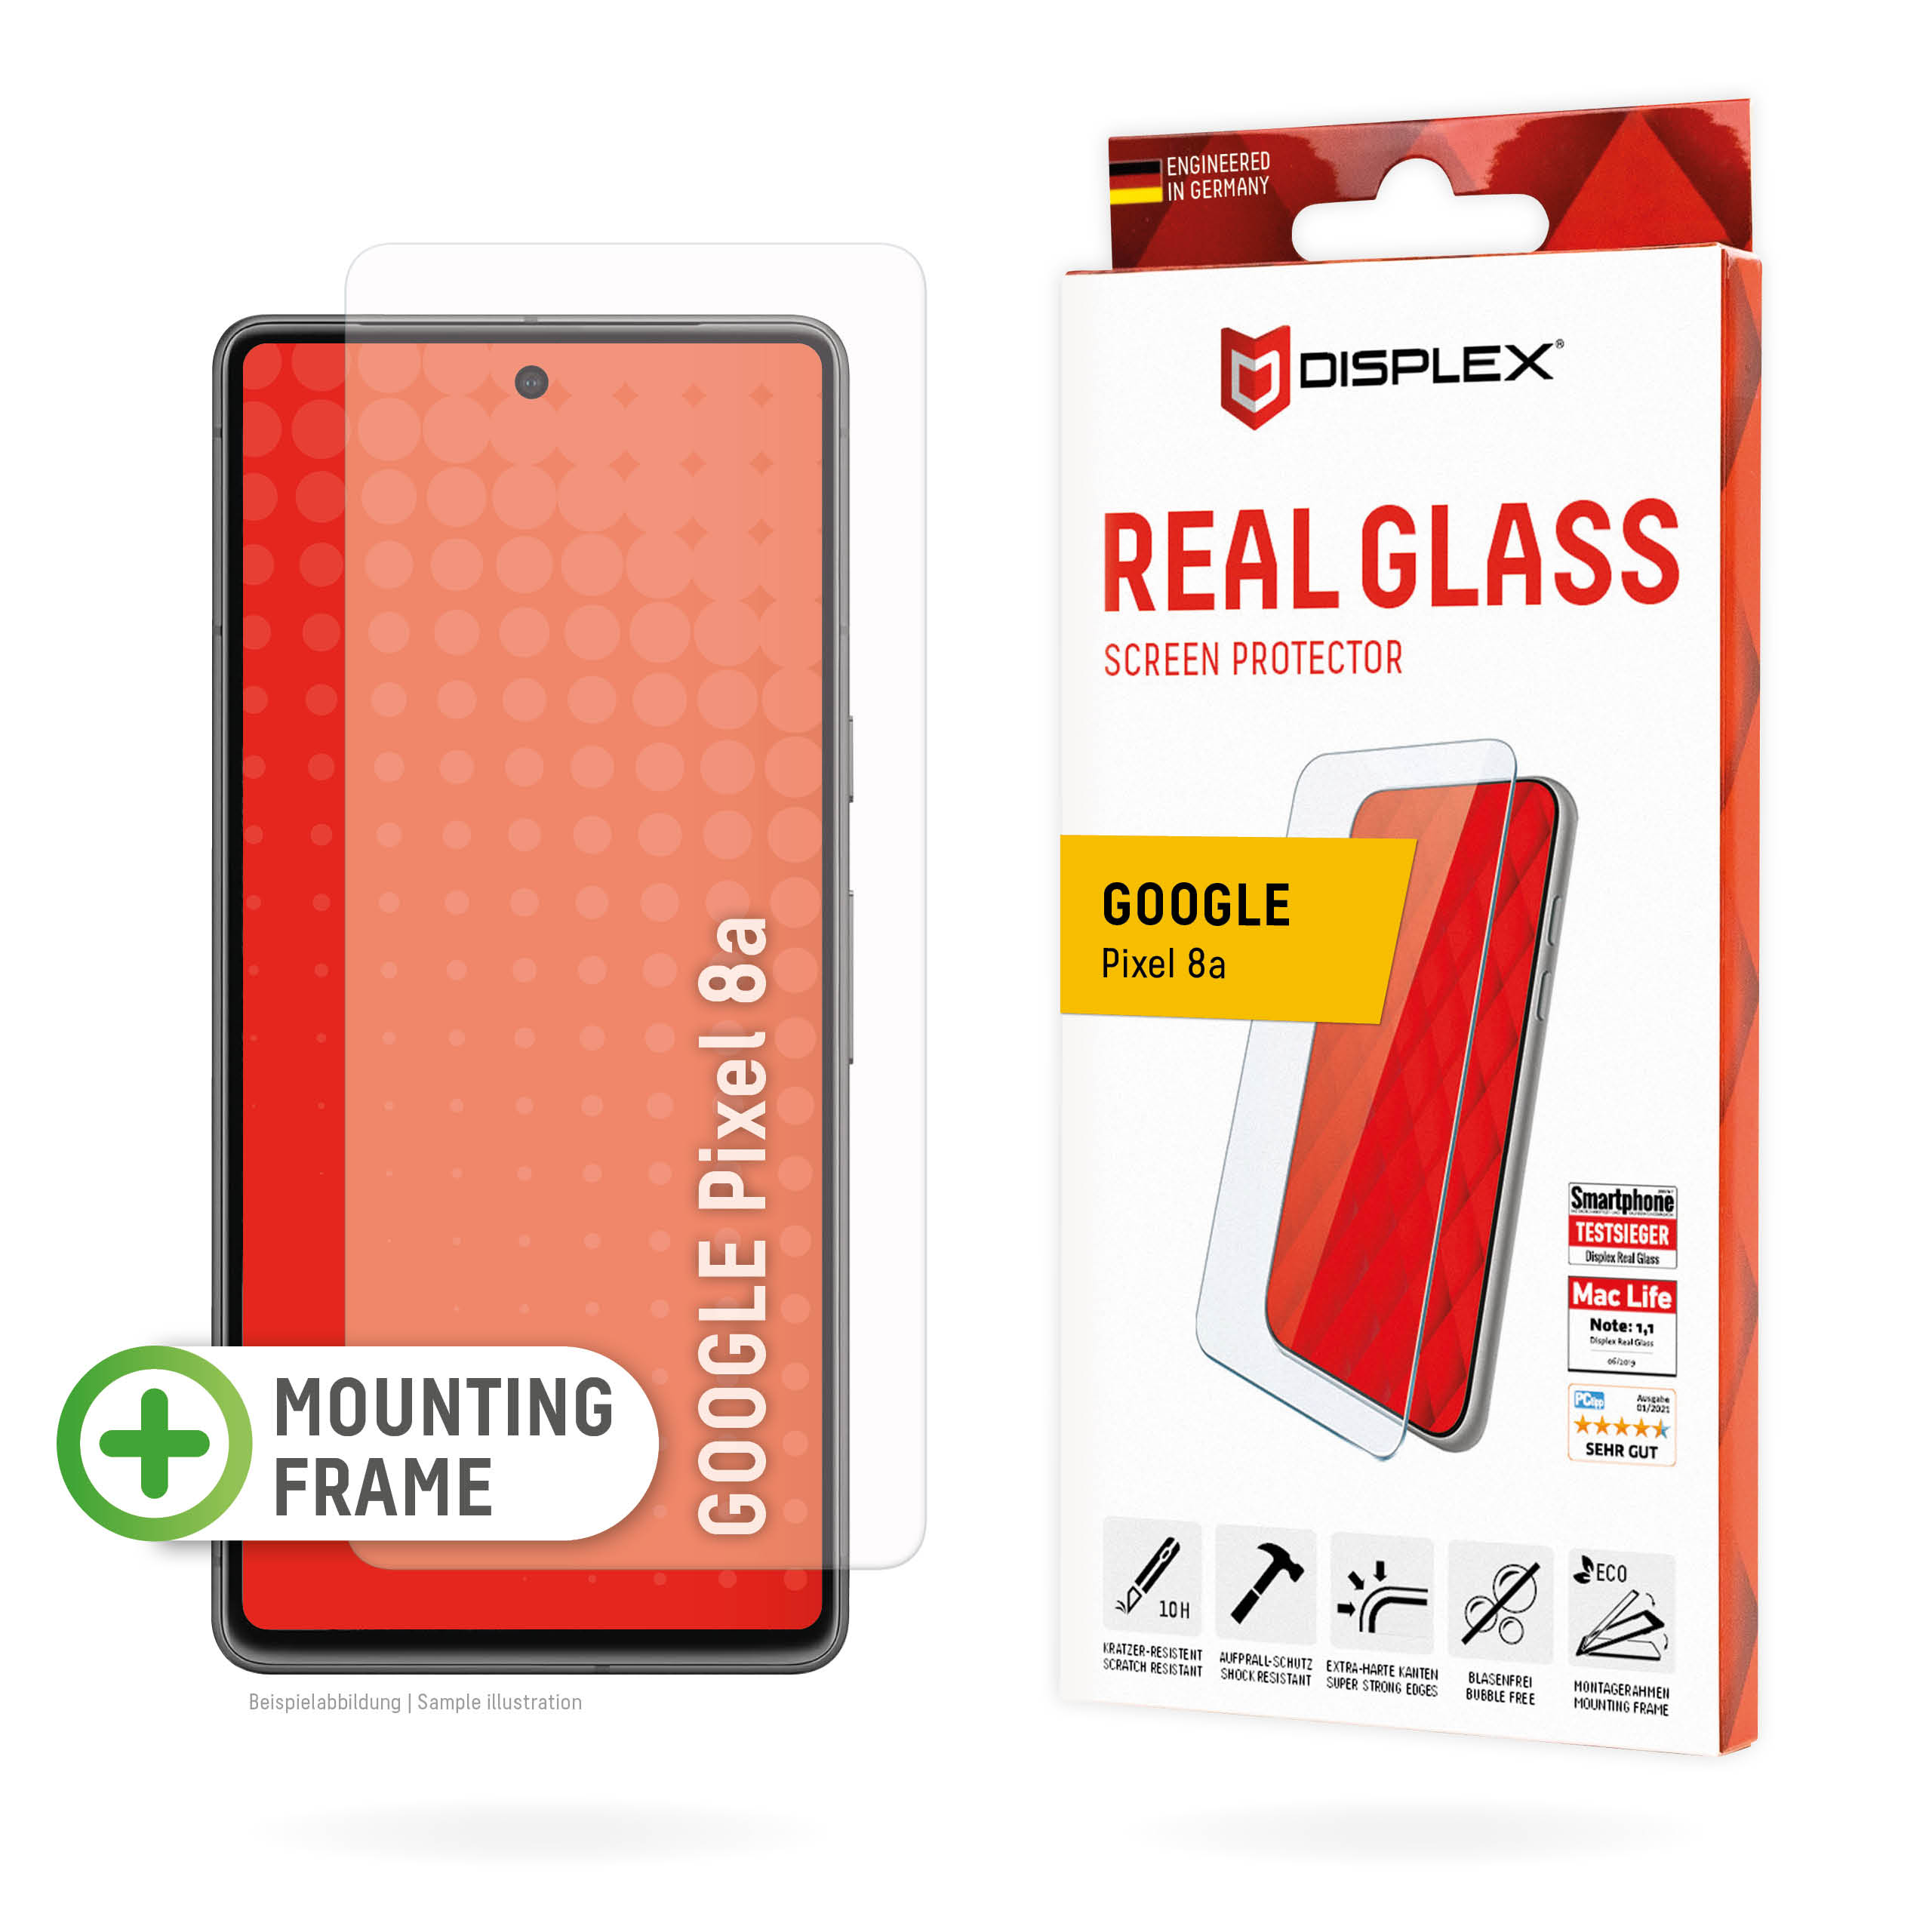 01927-Google-Pixel-8a-Real-Glass-2D_EN